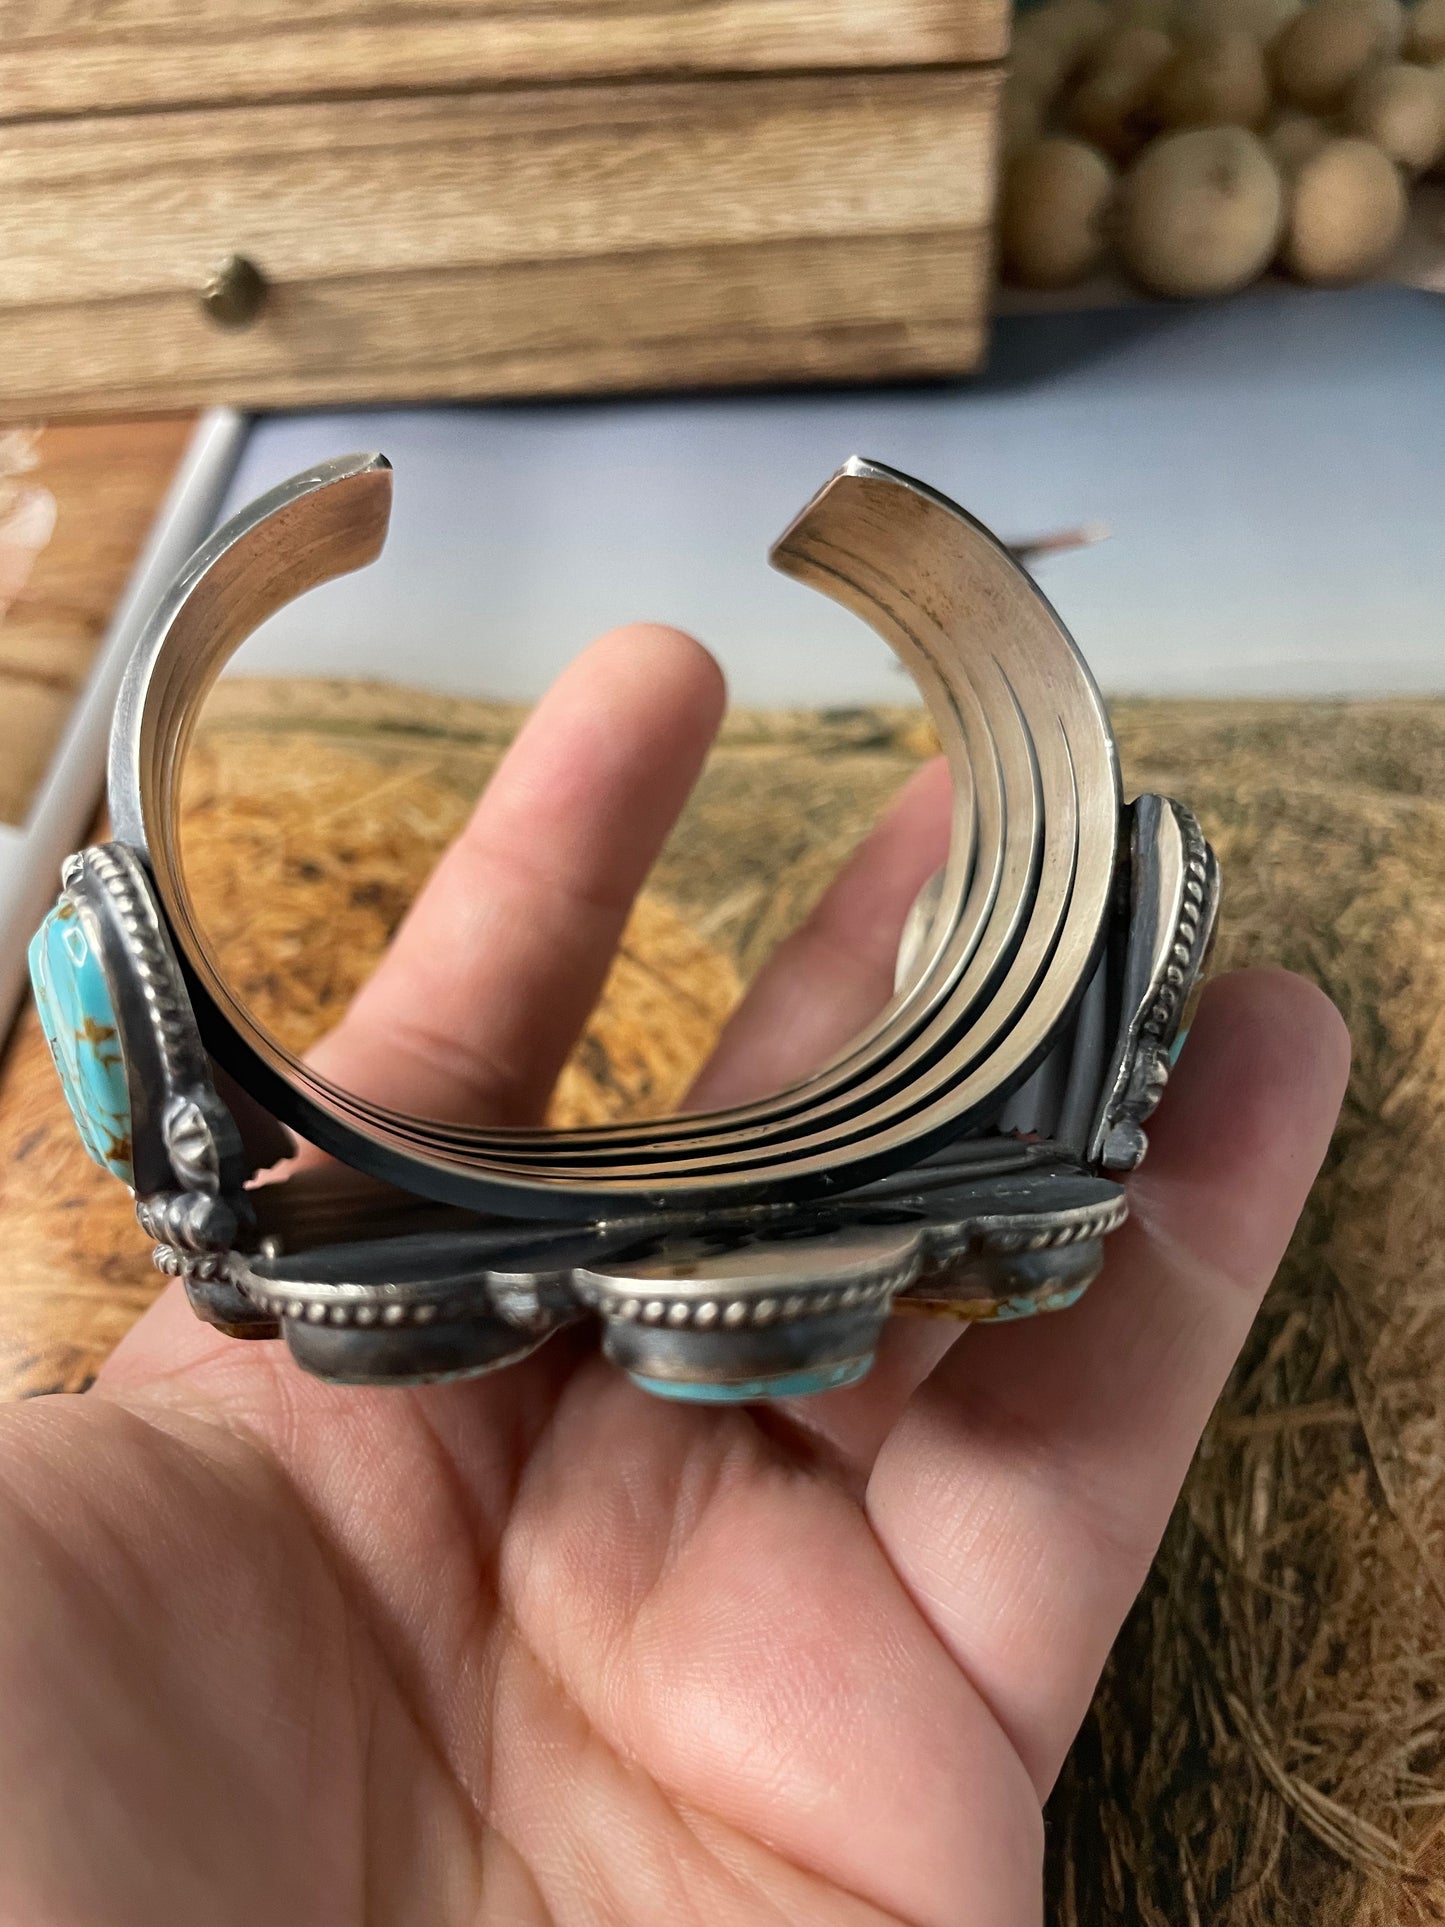 Anthony Skeets Navajo Flower Turquoise & Sterling Silver Cuff Bracelet Signed